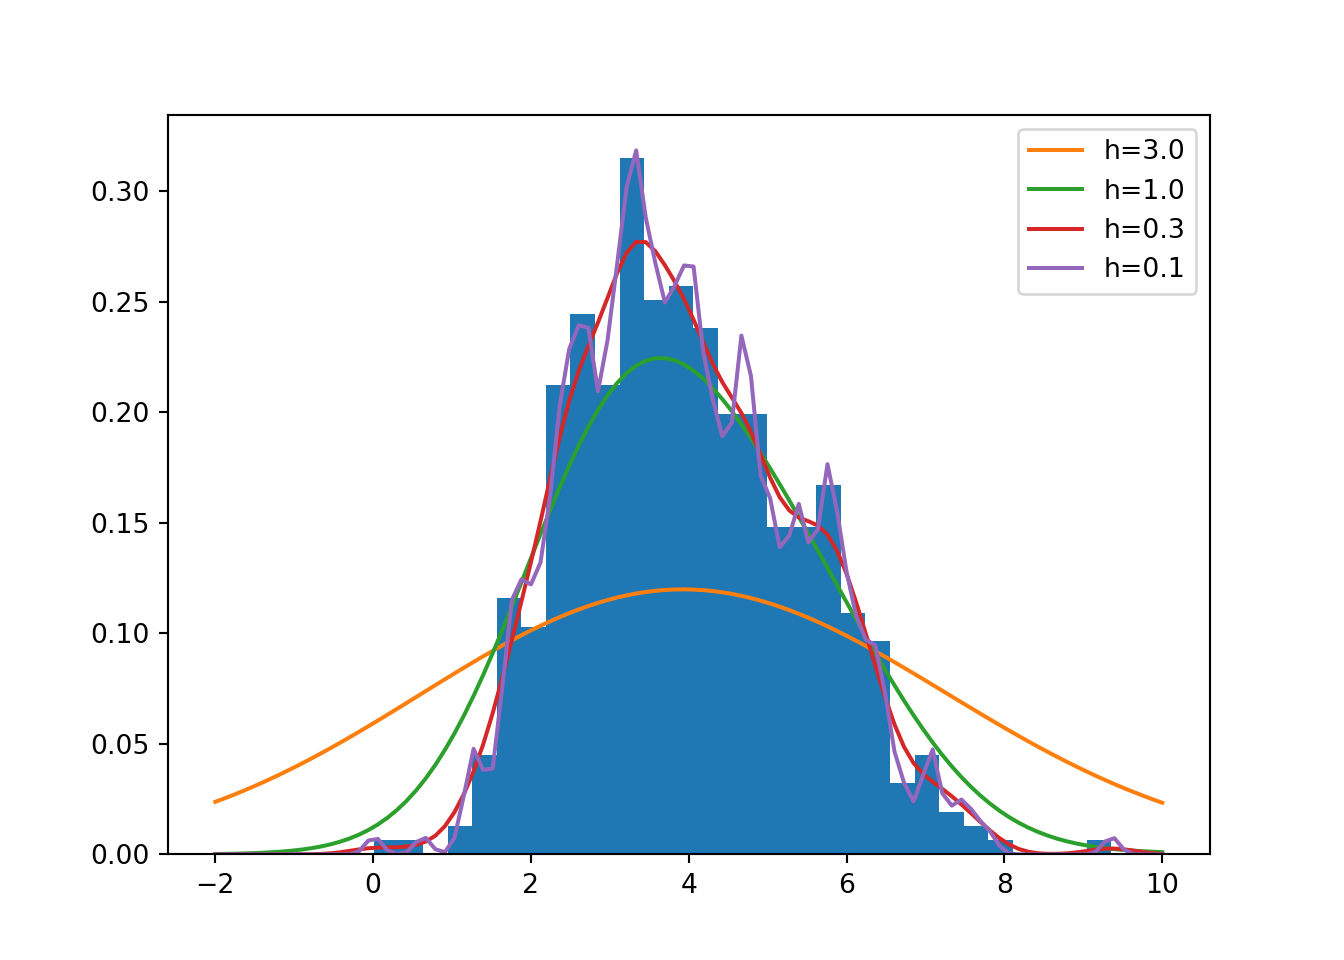 Illustration of kernel density estimation with the Gaussian kernel.